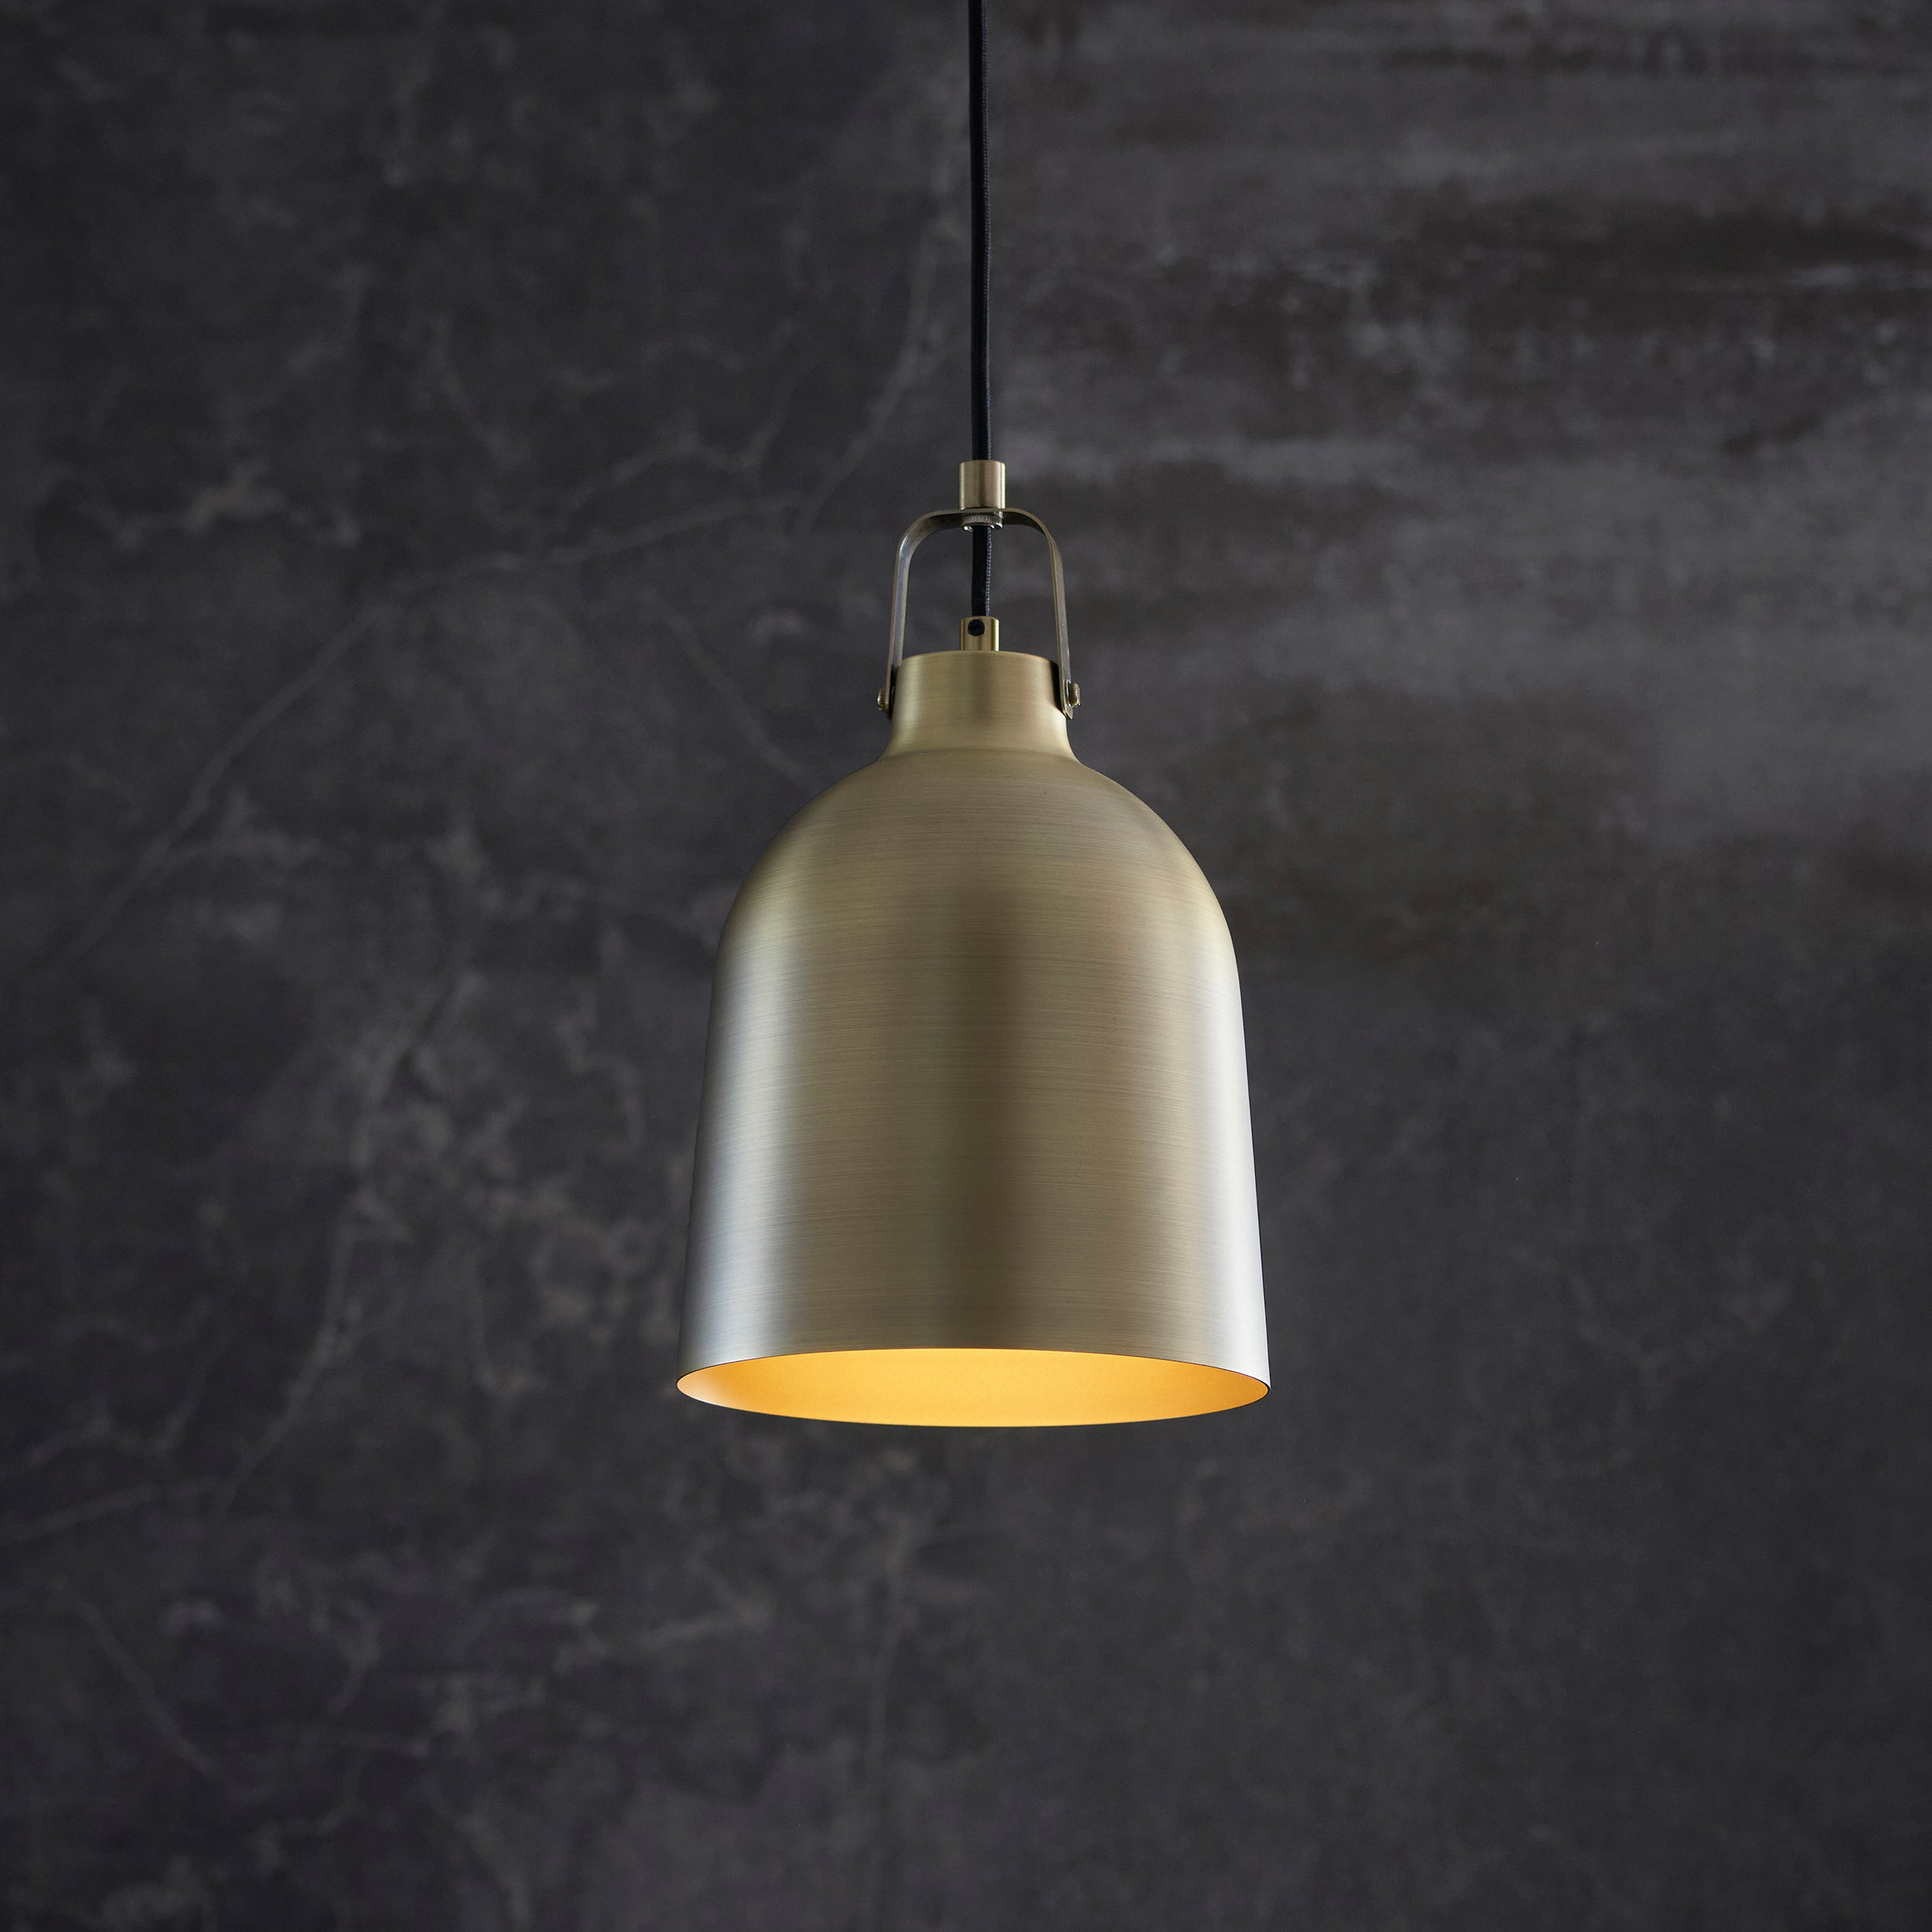 Lazenby Industrial Style Dark Antique Brass Pendant Light